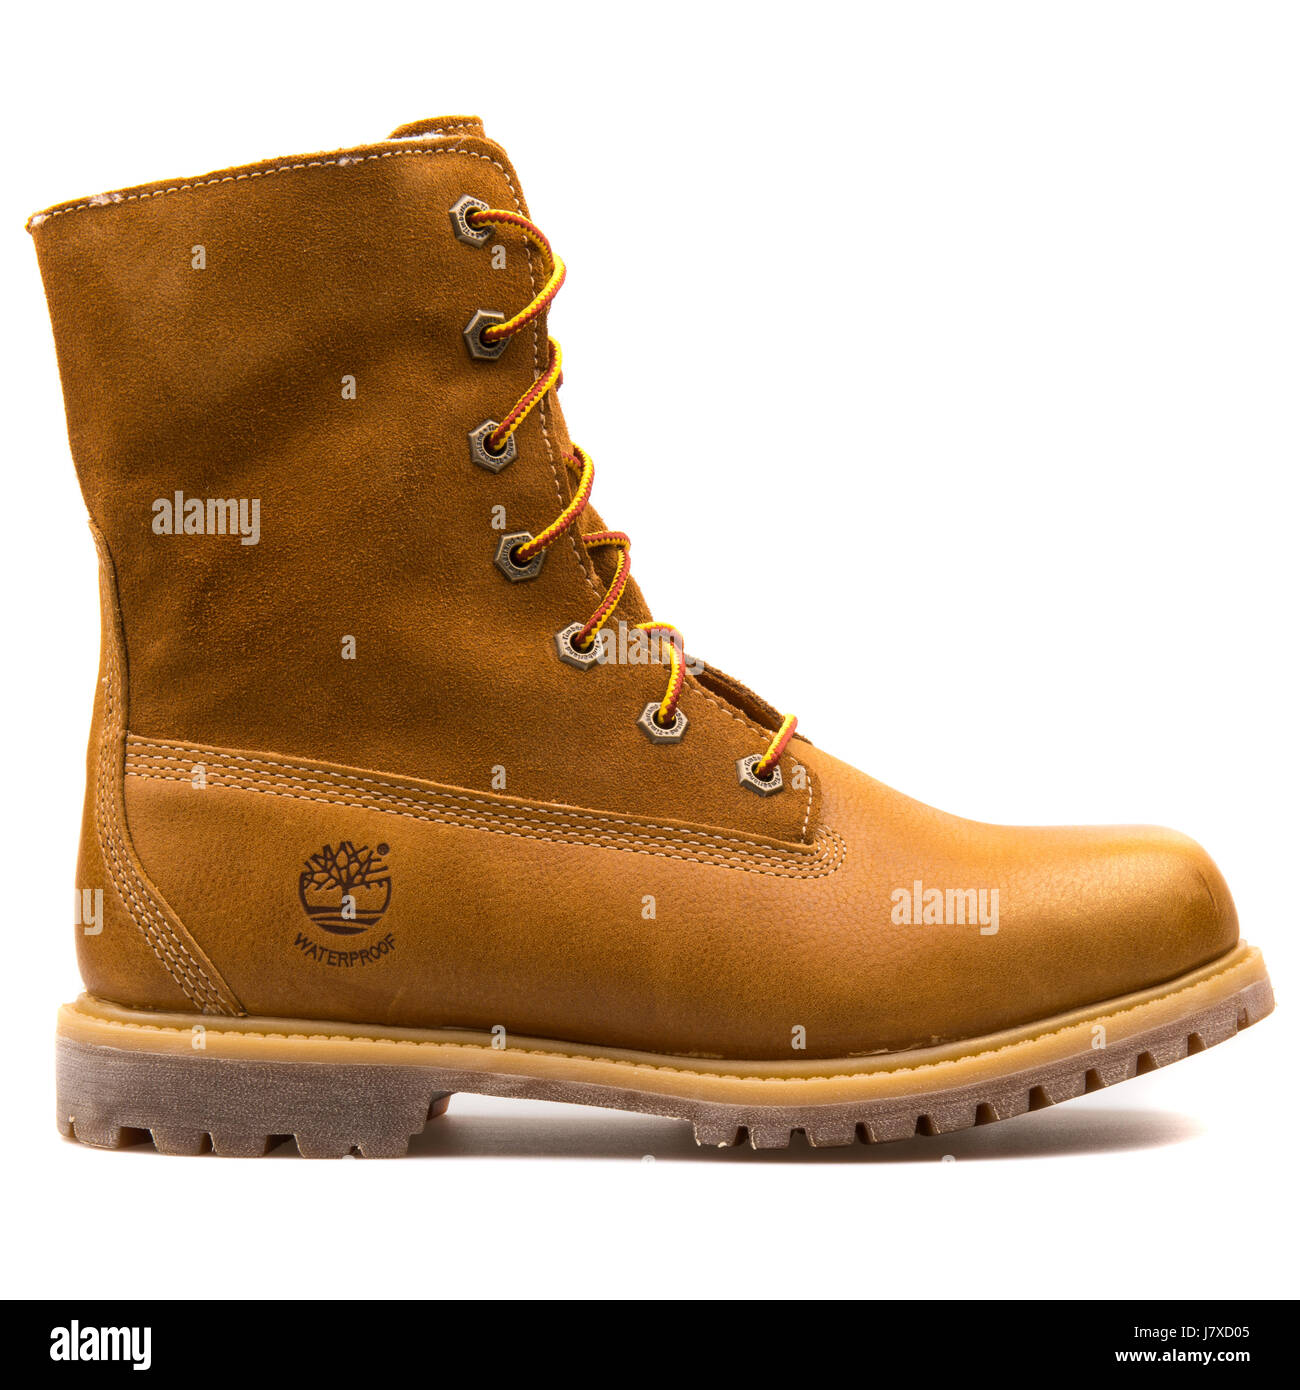 Timberland Authentics Teddy Flea Wheat Women's Waterproof Leather Boots -  A119C Stock Photo - Alamy